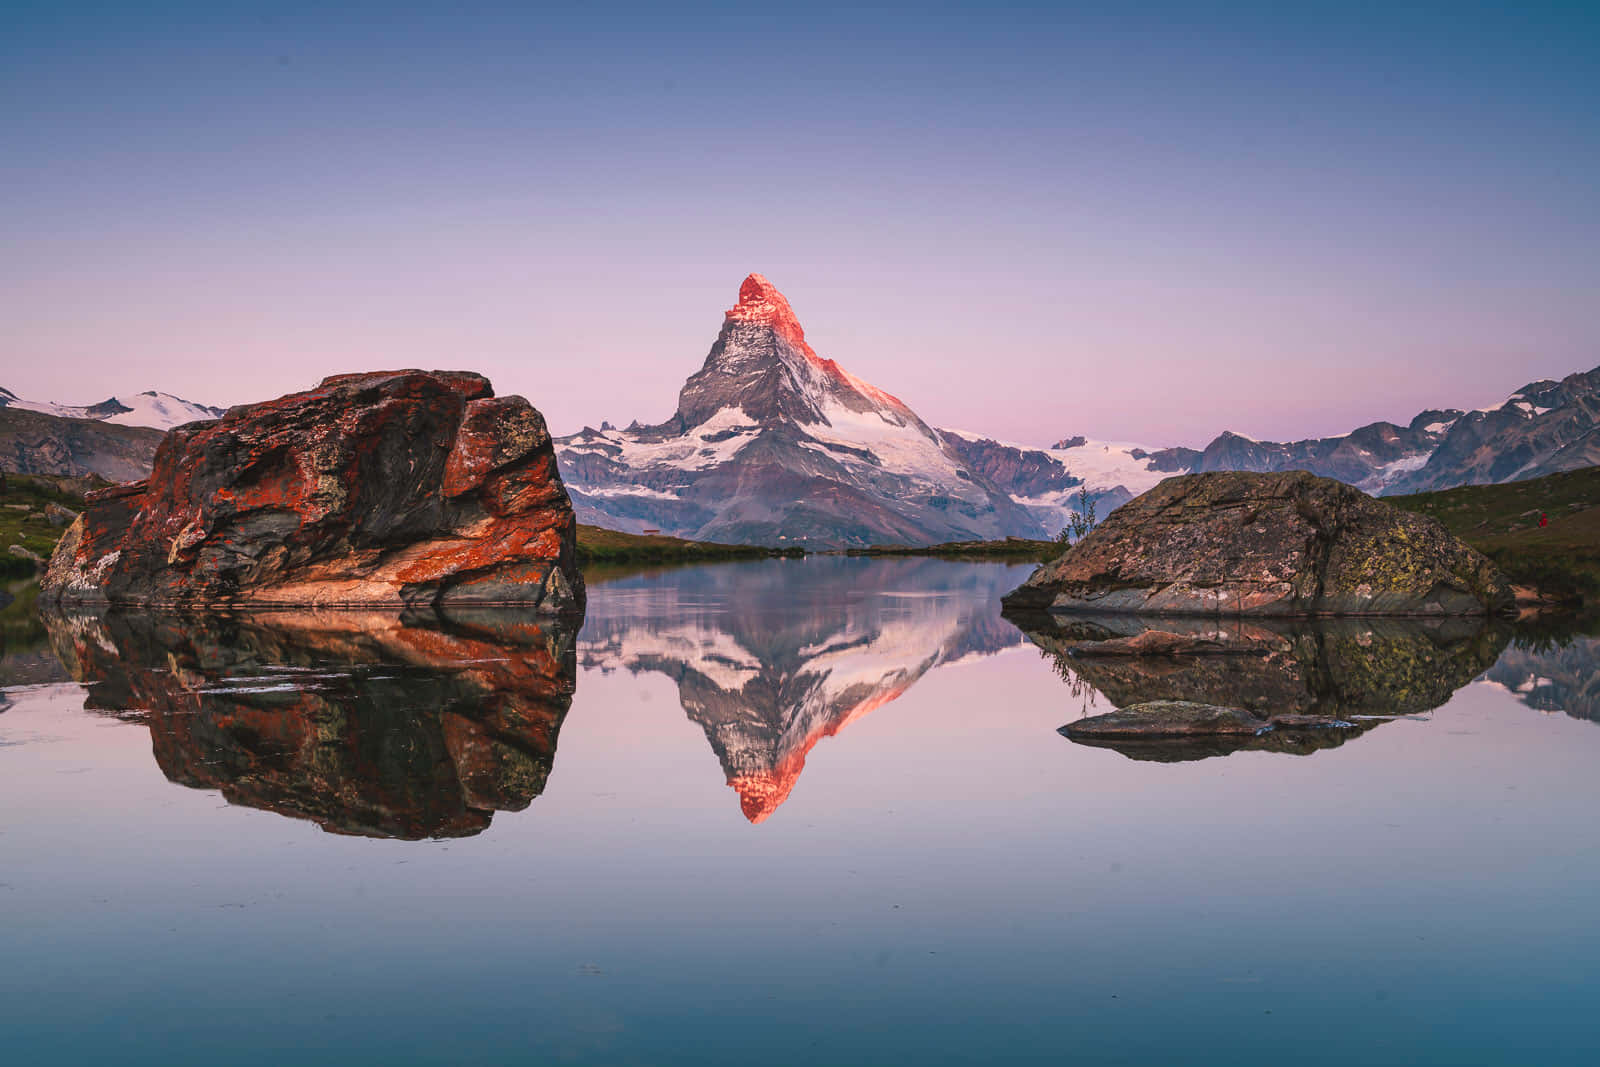 The Matterhorn Reflected In A Lake